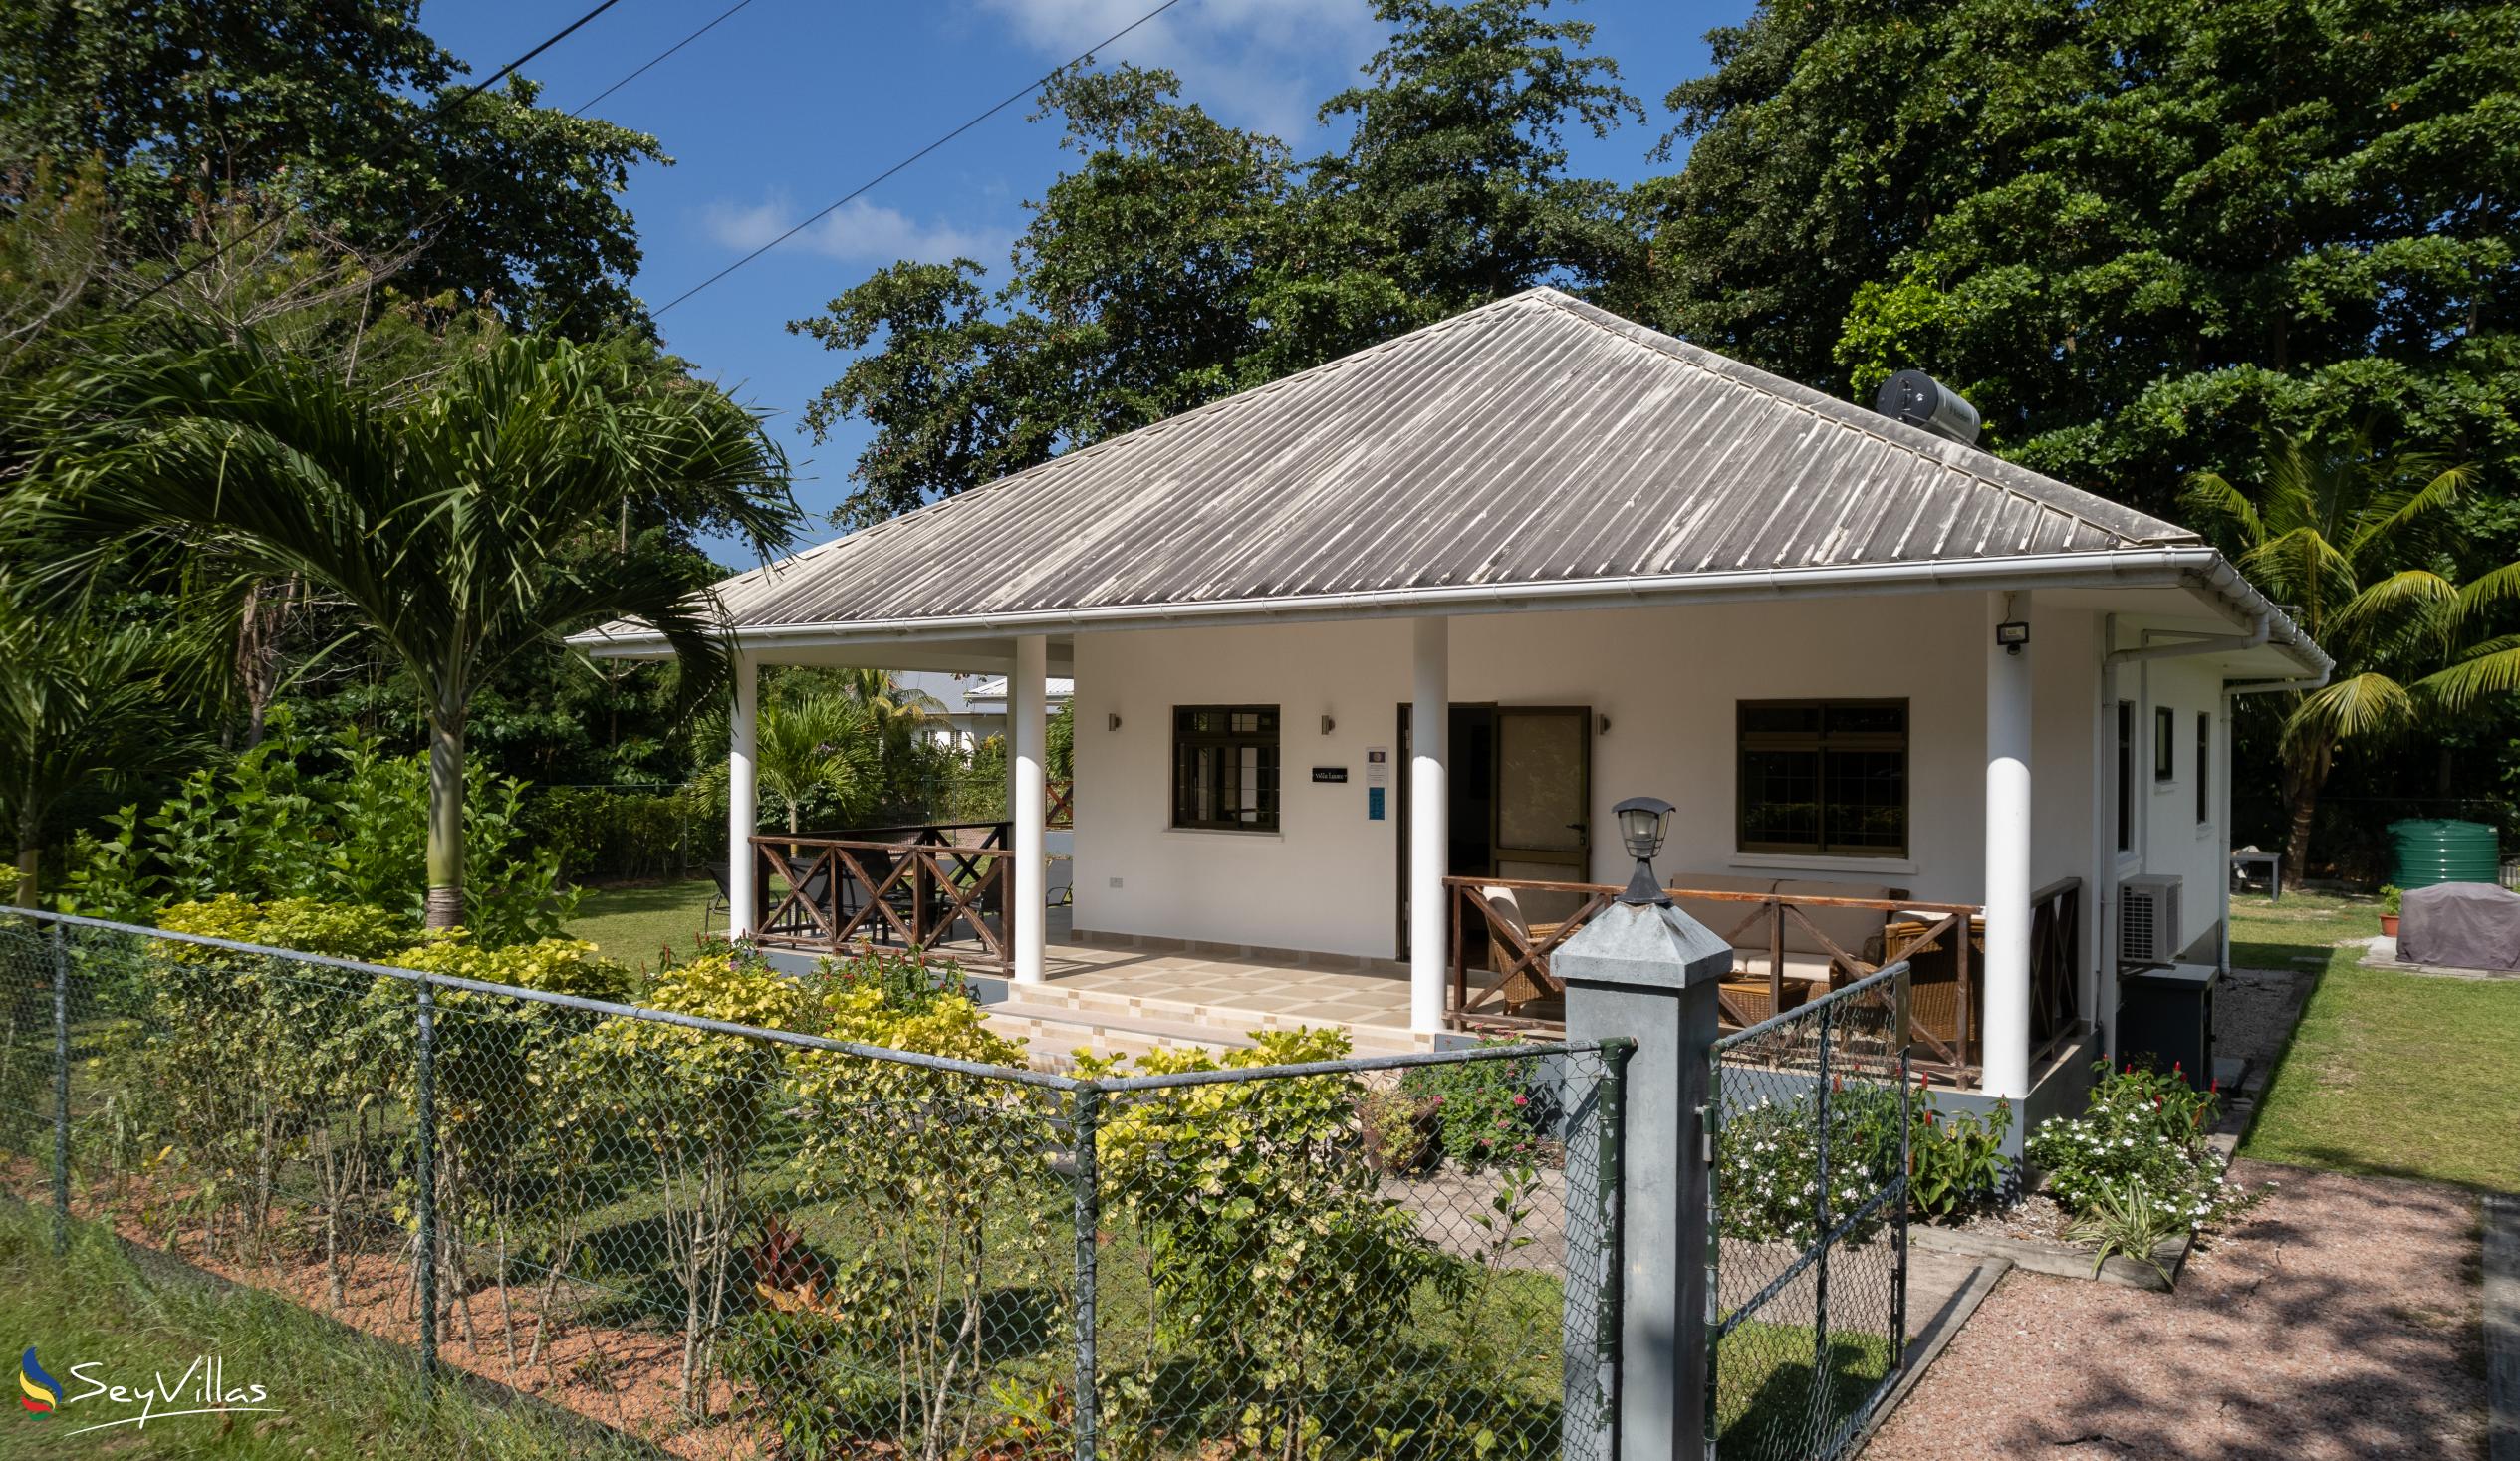 Foto 15: Villa Laure - Villa Laure - Praslin (Seychellen)